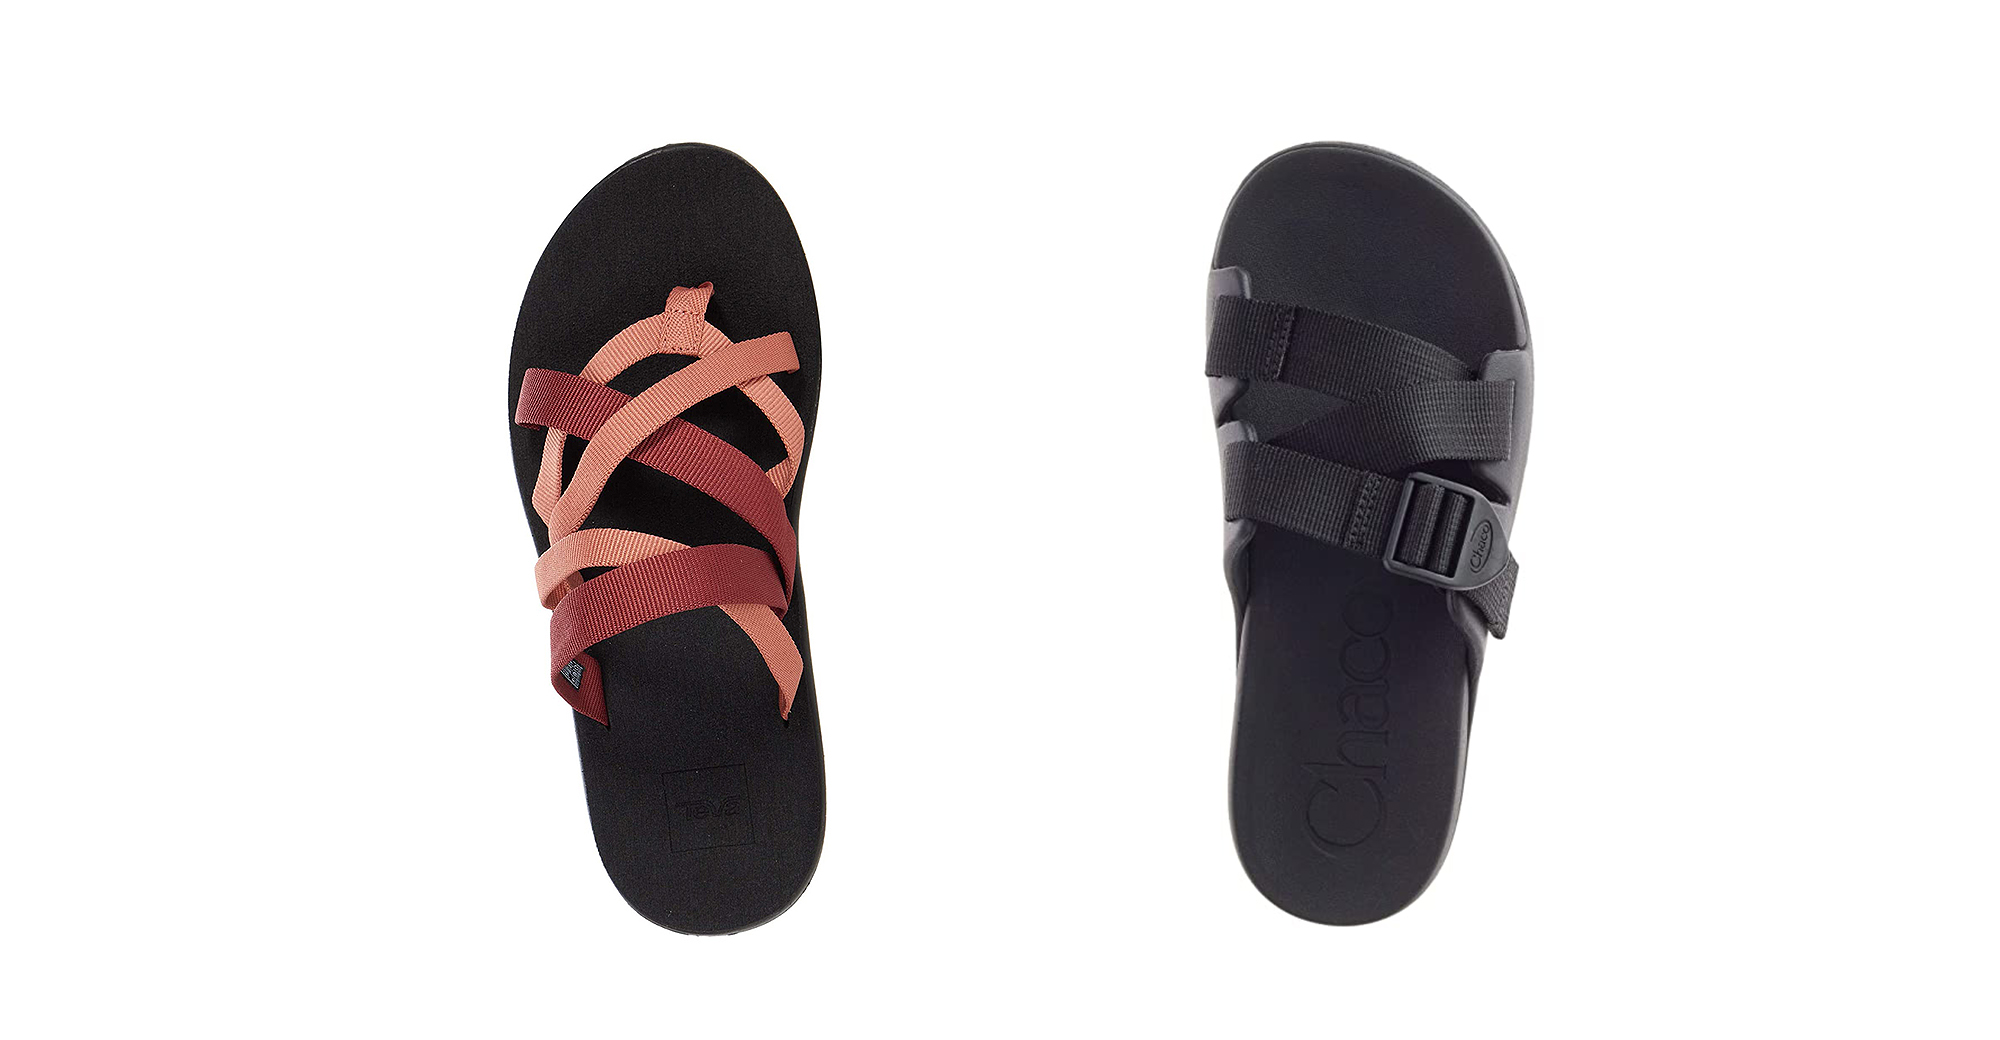 Teva's Slide Slippers Will Change Your Fall Footwear Outlook